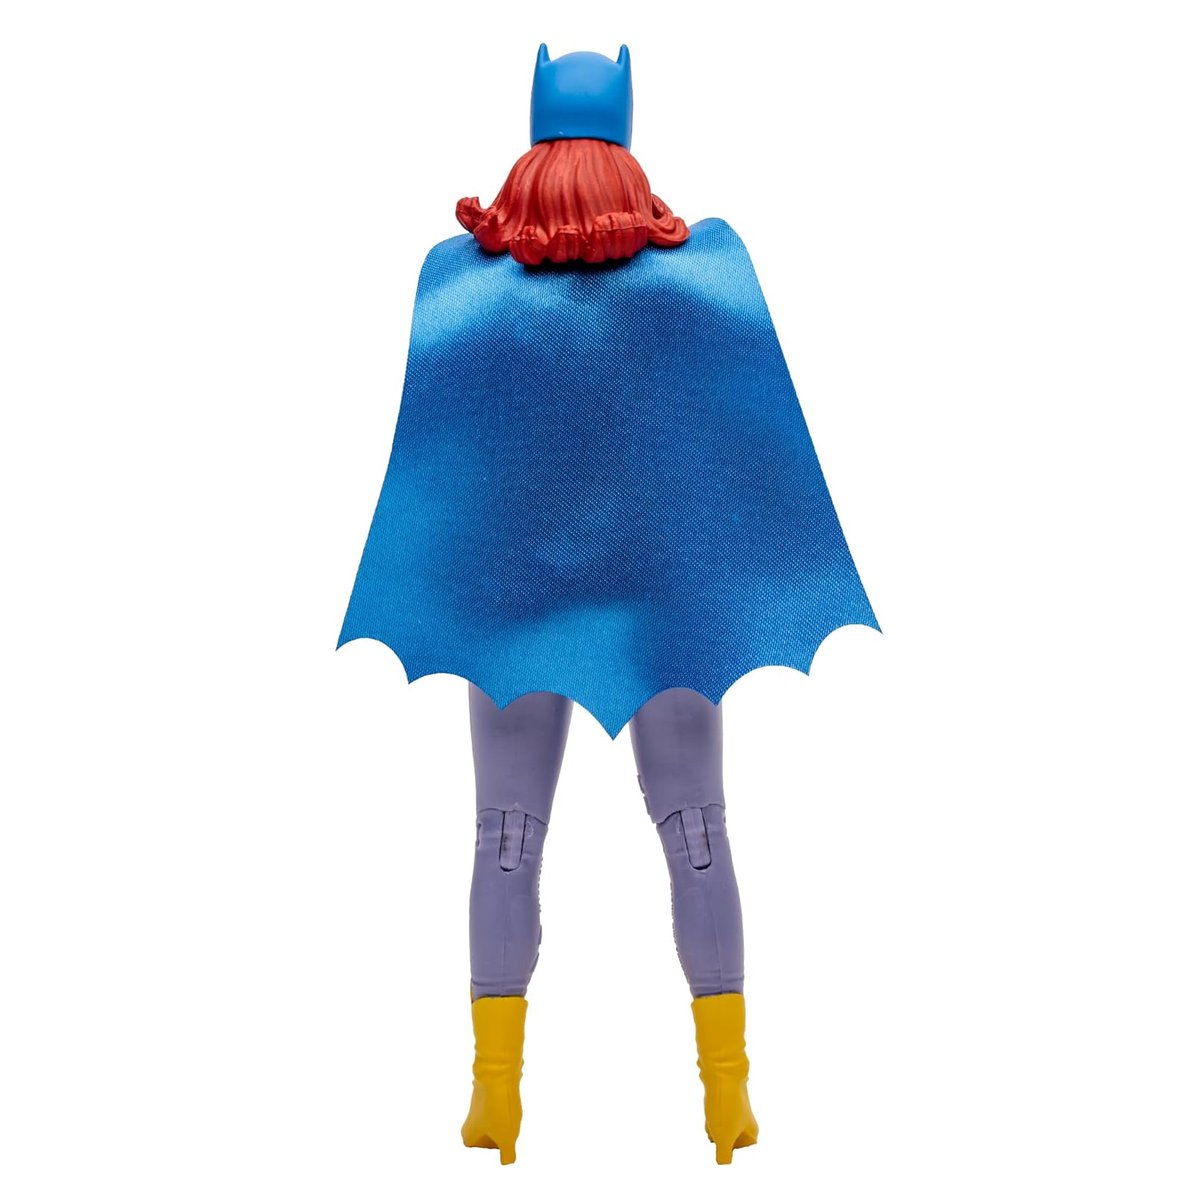 DC Retro The New Adventures of Batman Batgirl - McFarlane Toys

Link para compra BR: *Possível importar pelo Link abaixo

Buy here: amzn.to/4aFC9ya

#dc #comics #McFarlane #actionfigure #dcmultiverse #dcretro #animatedseries #batman #TheNewAdventuresofBatman #batgirl